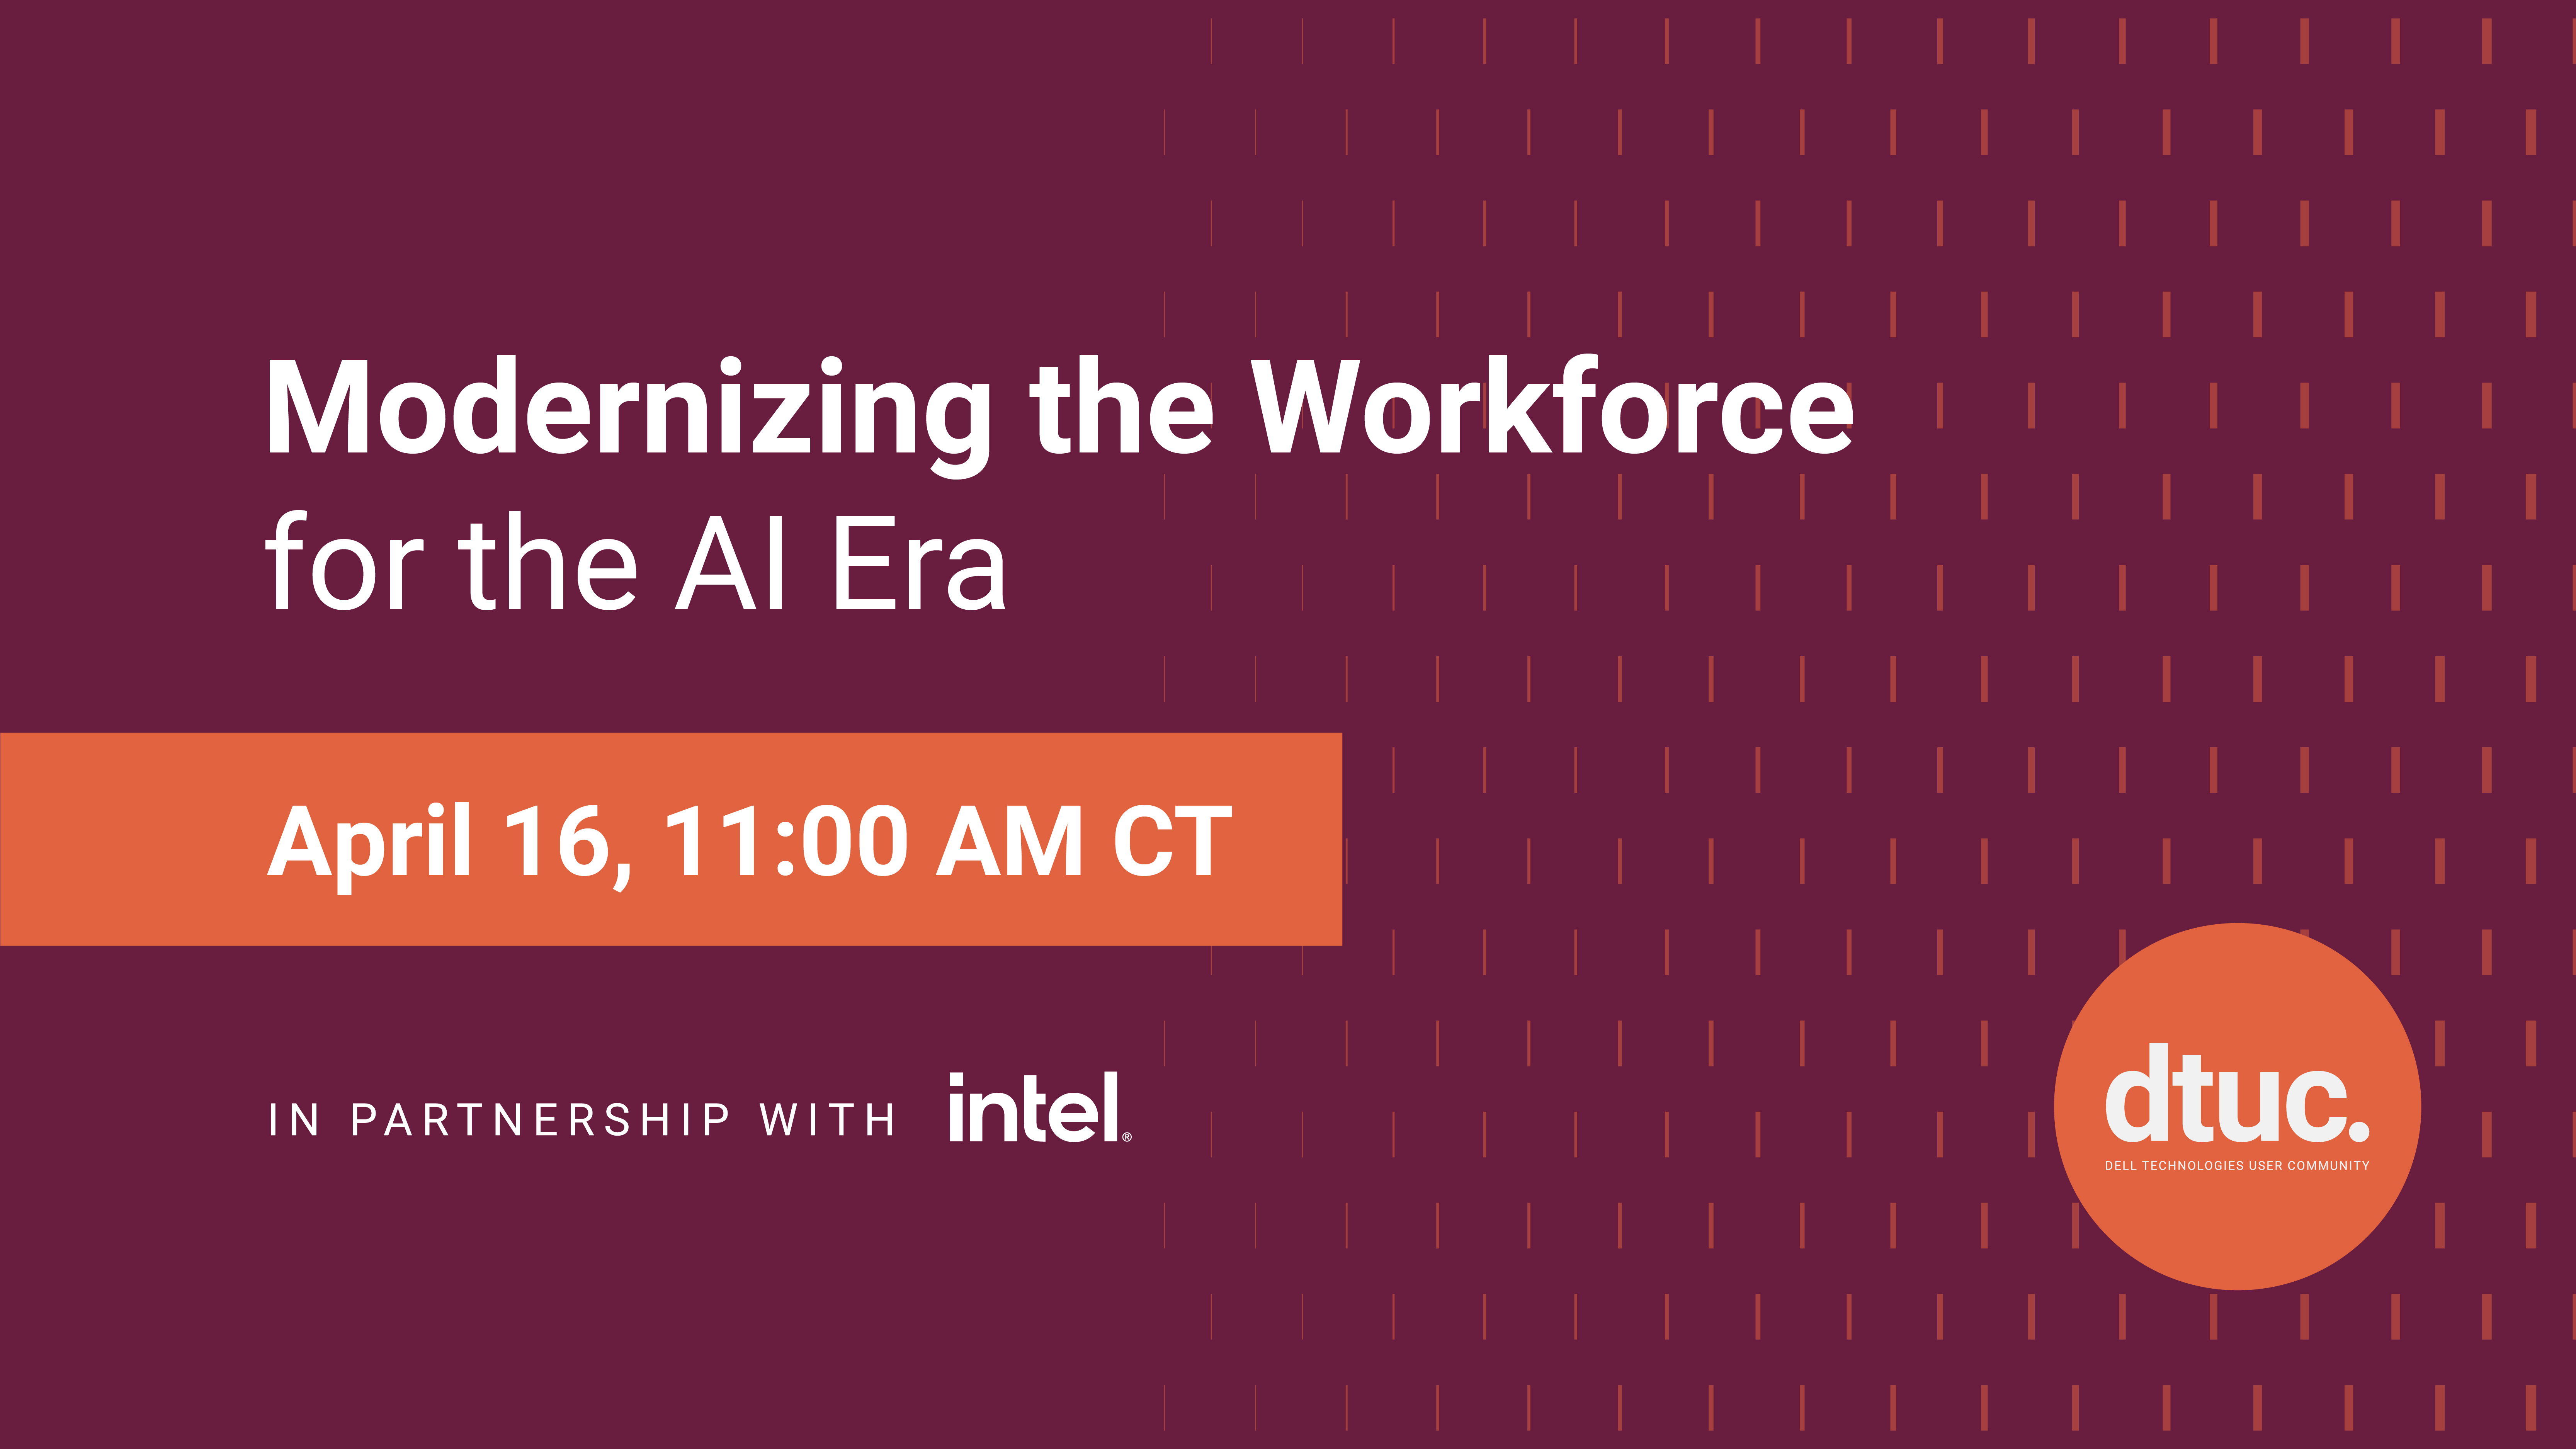 Modernizing the workforce for the AI Era